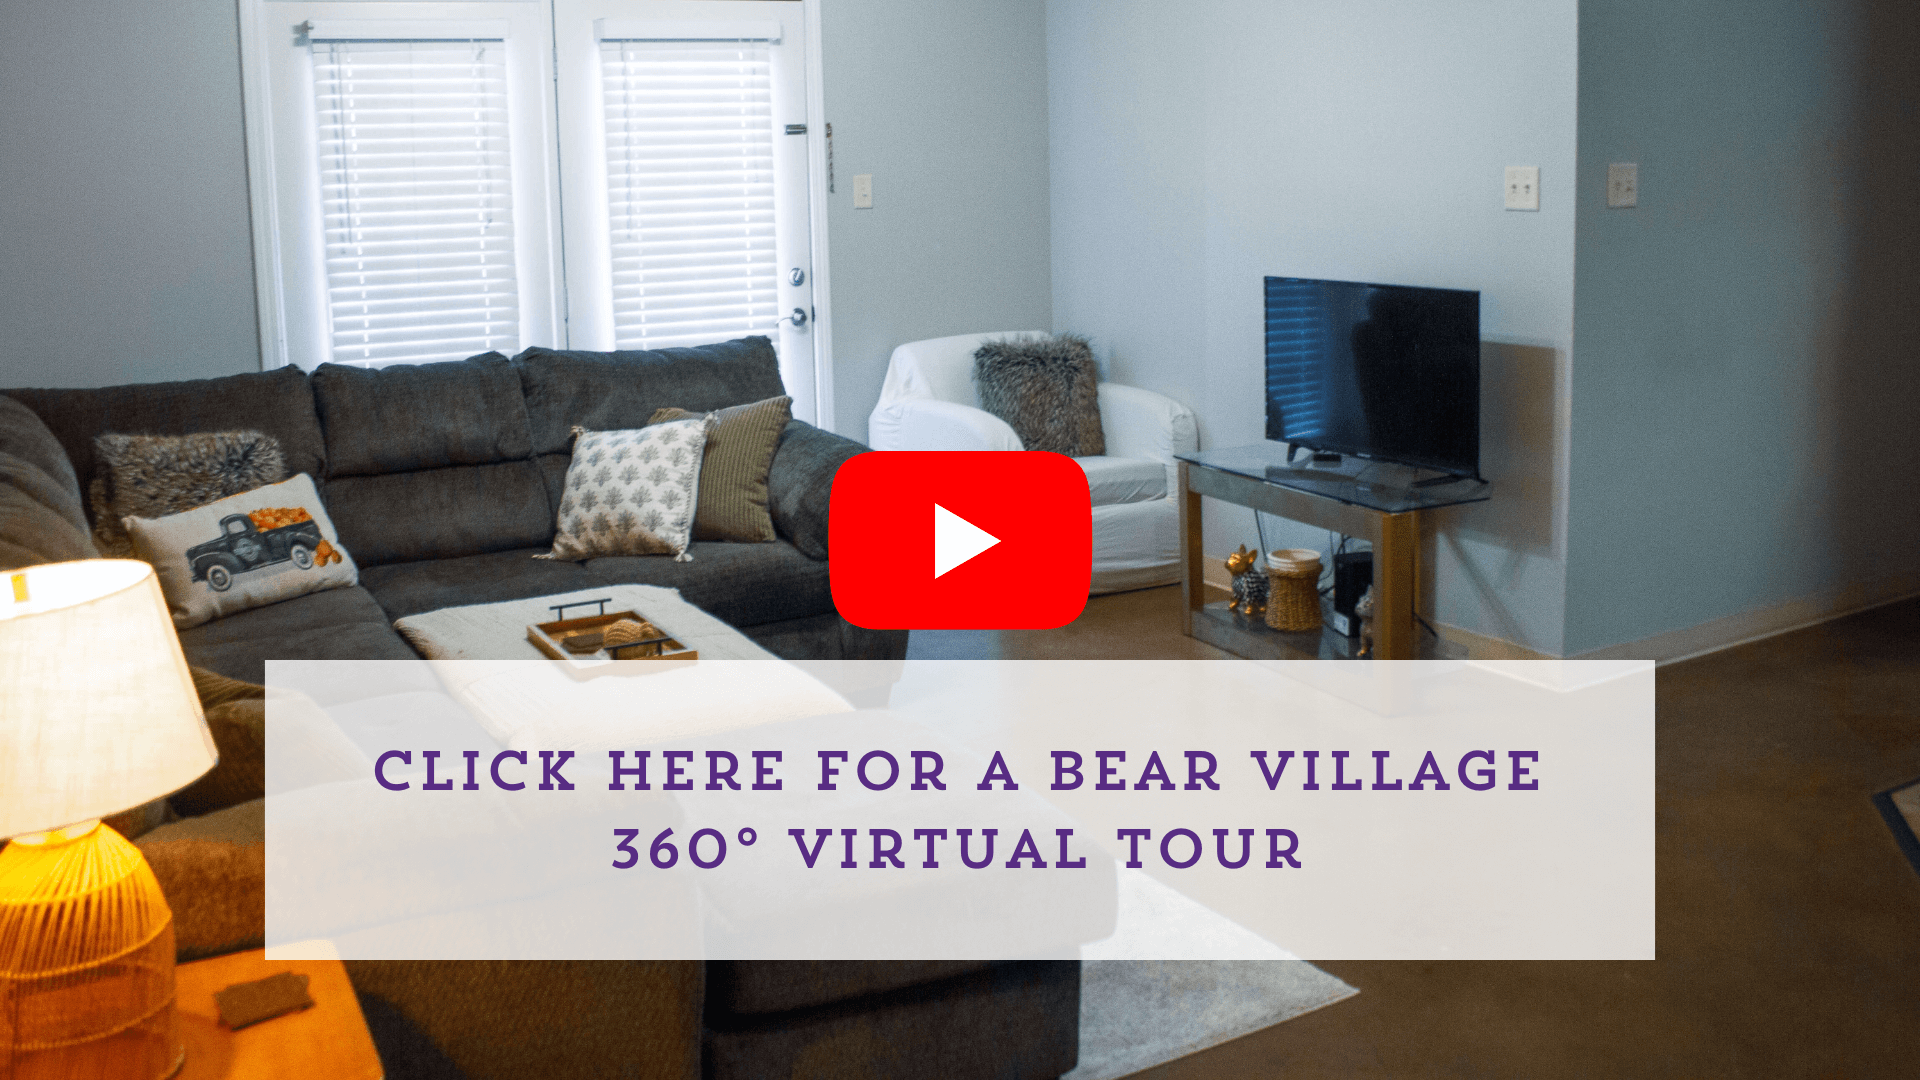 Alt text: click here for a bear village 360 degree virtual tour